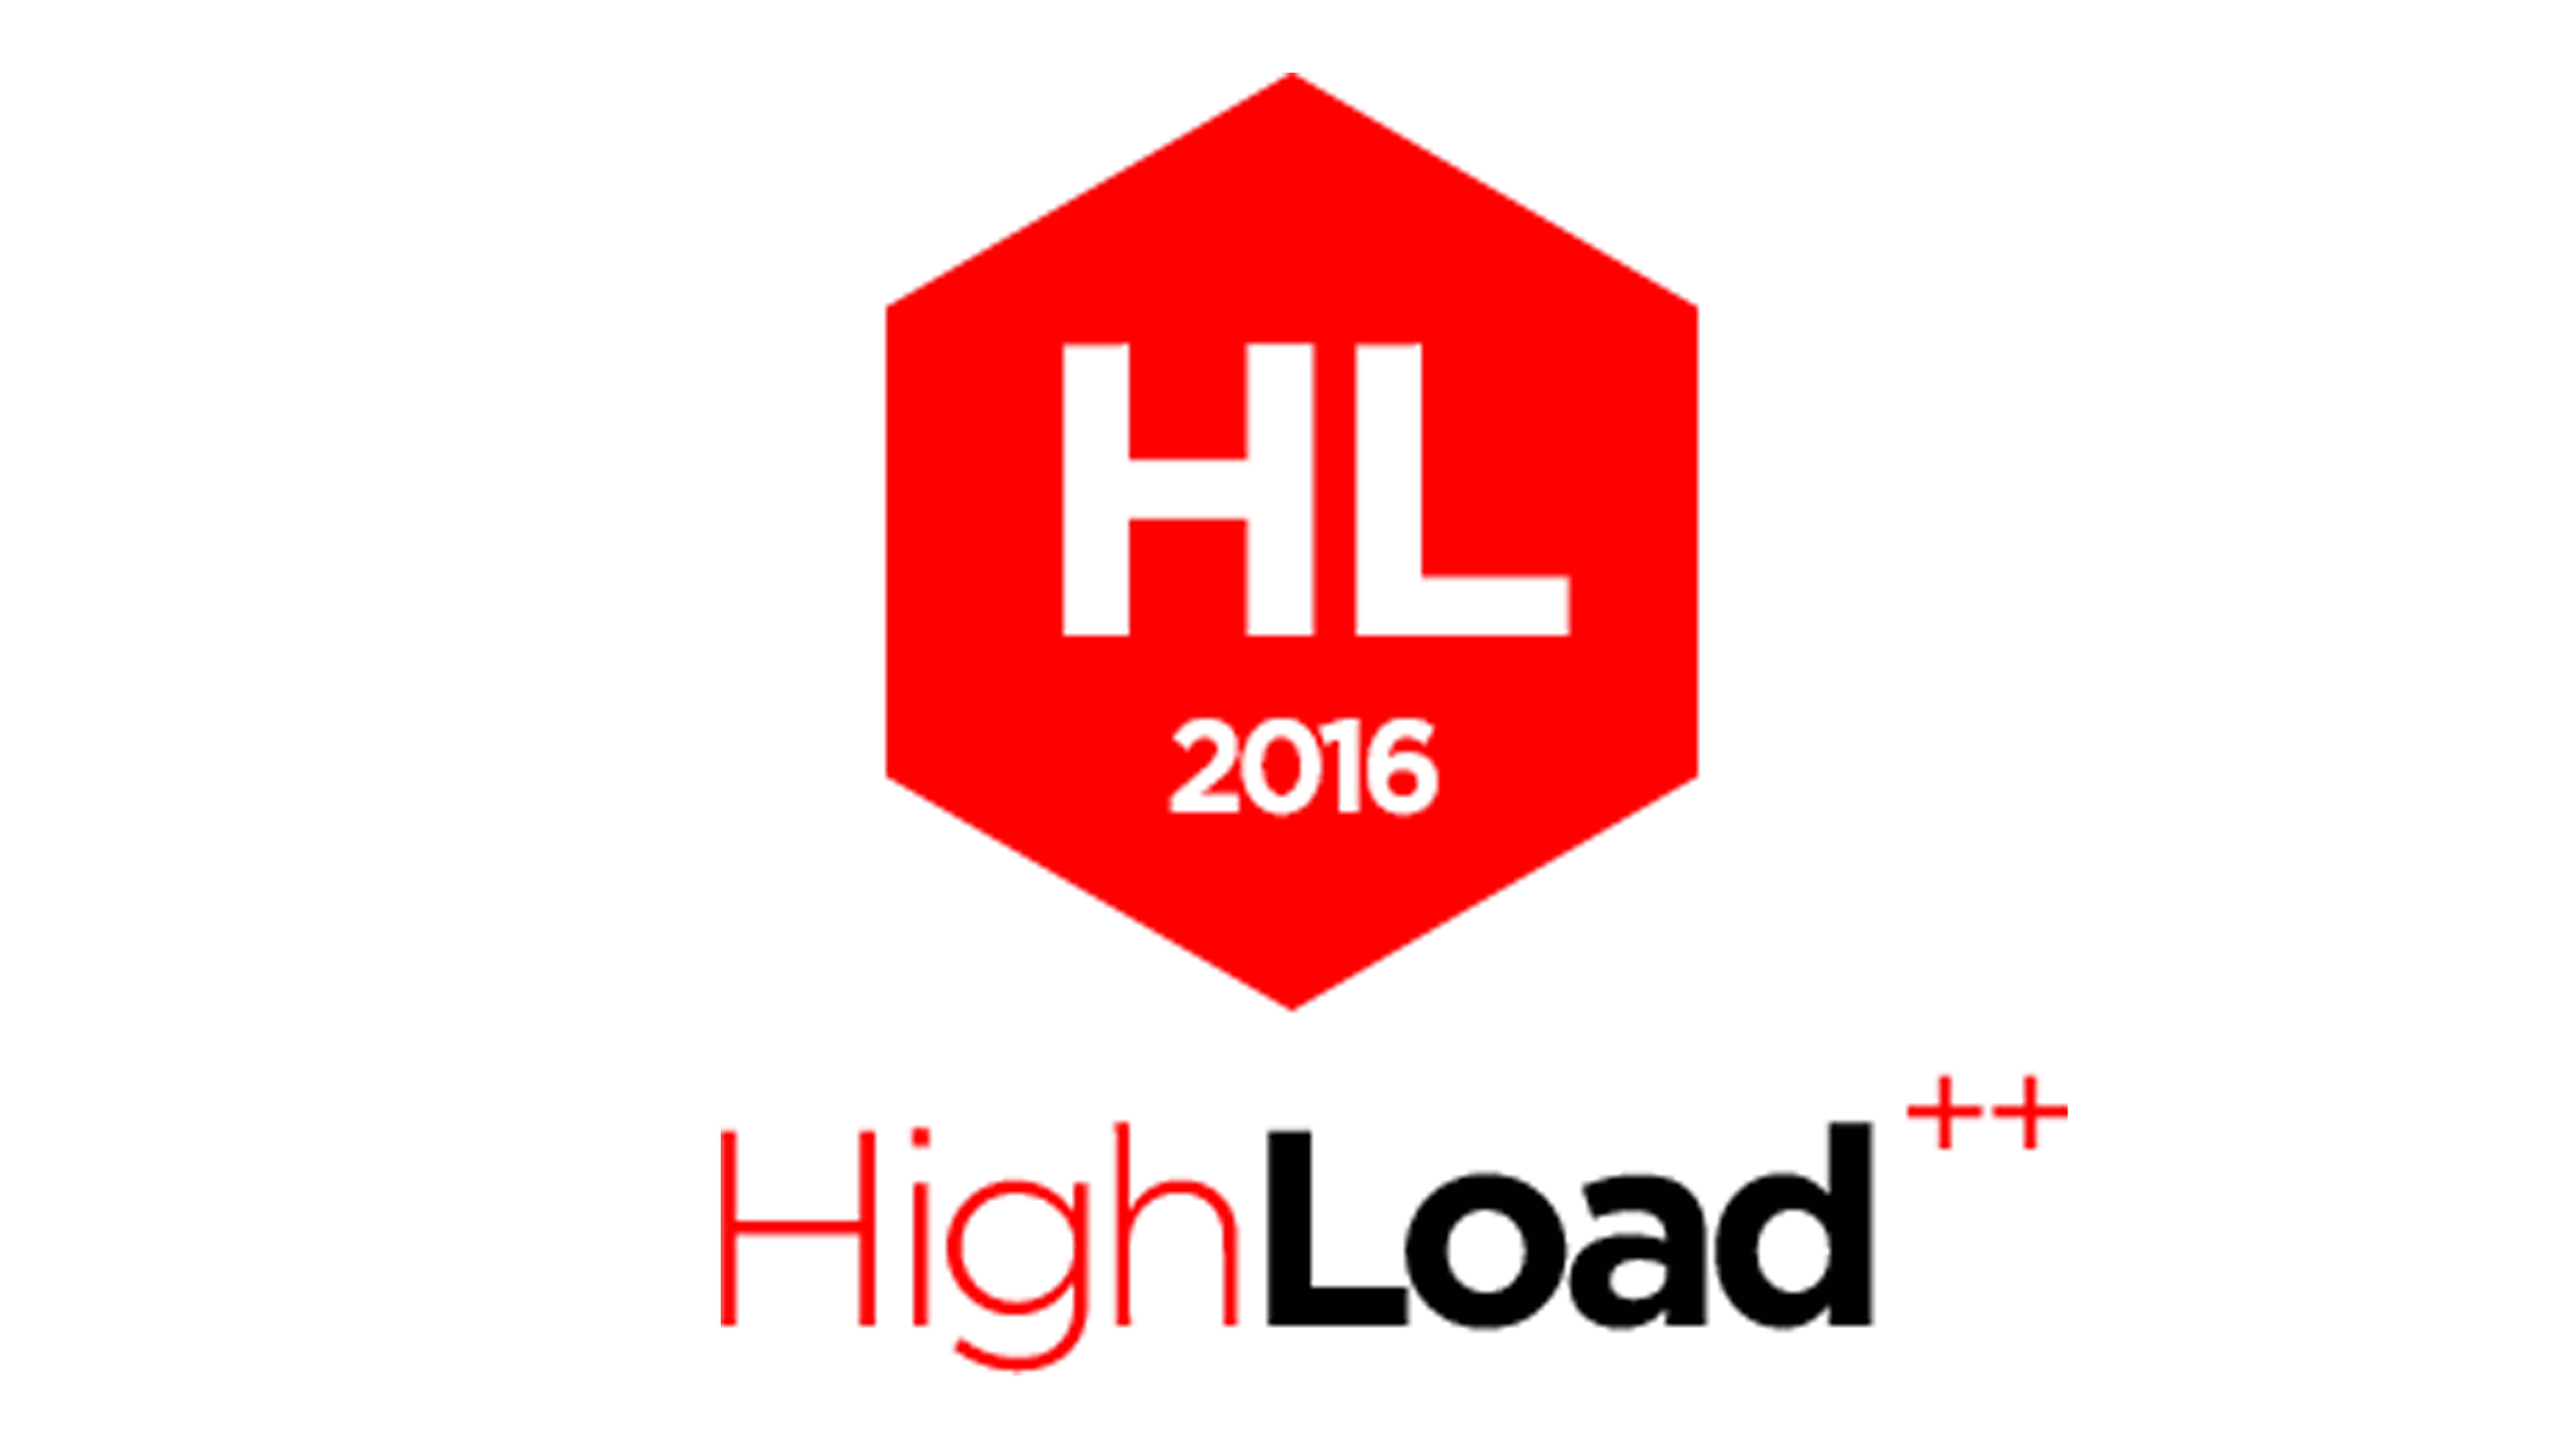 Professional conference HighLoad 2016